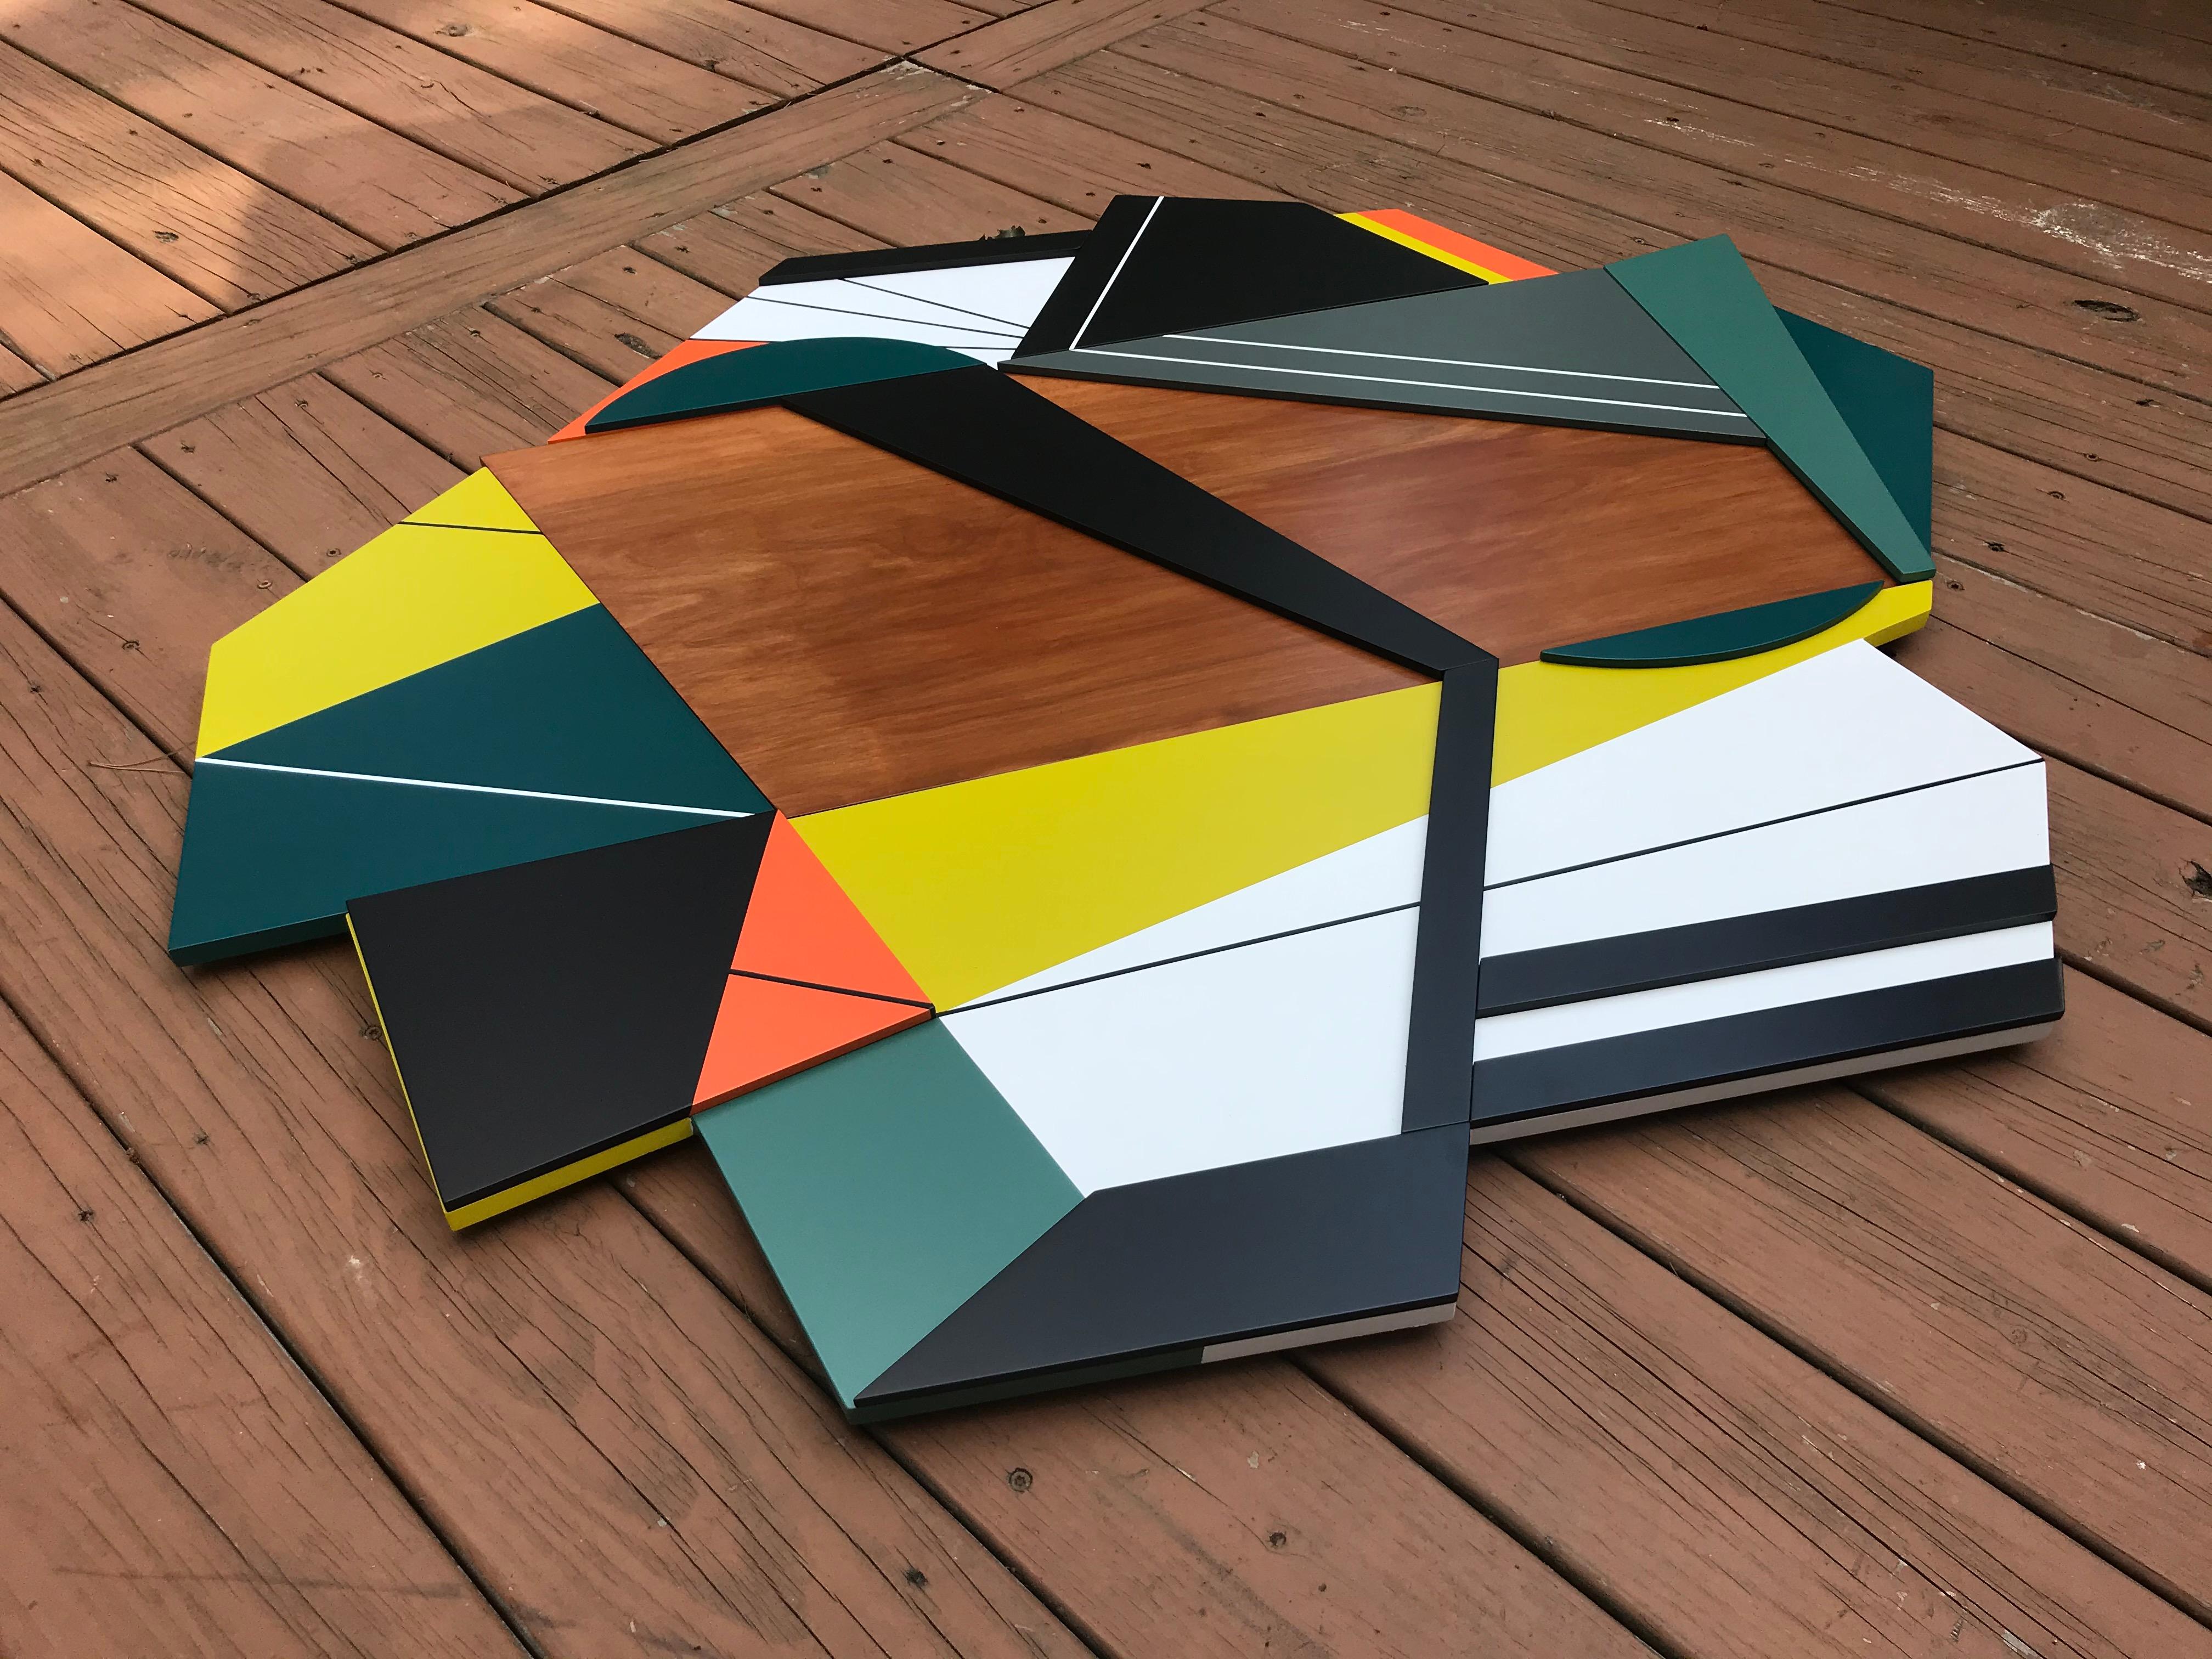 Achtung VI (Frank Stella bold mid-century modern abstract geometric green orange 1